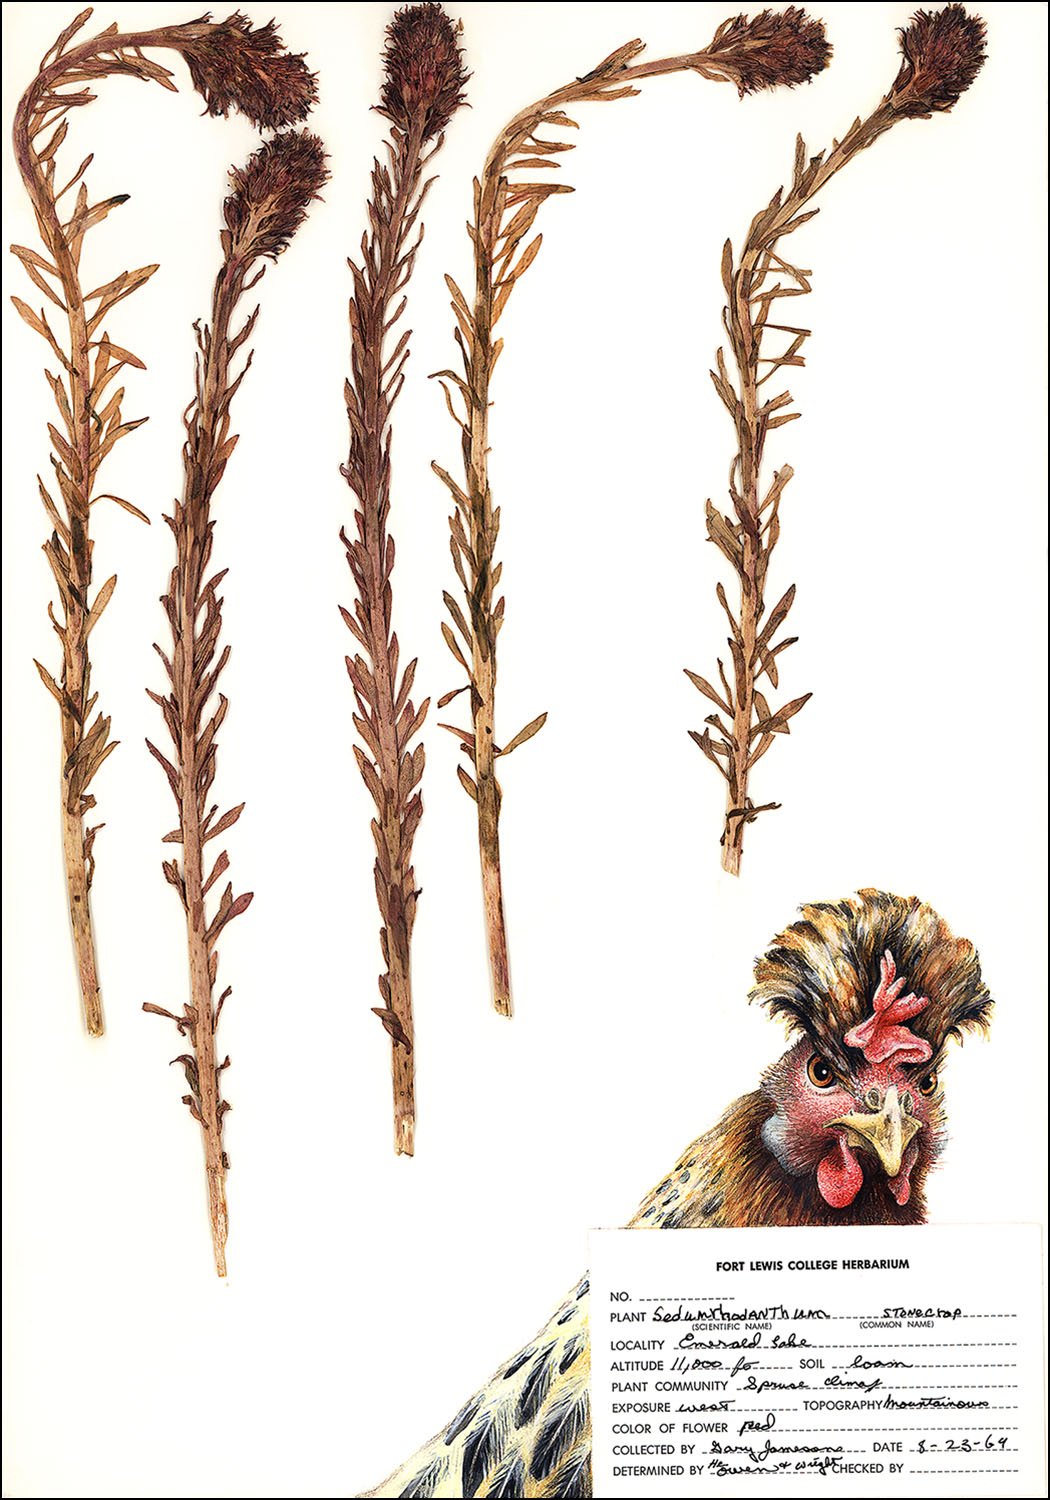 Stonecrop, a Crested Chicken Interfering